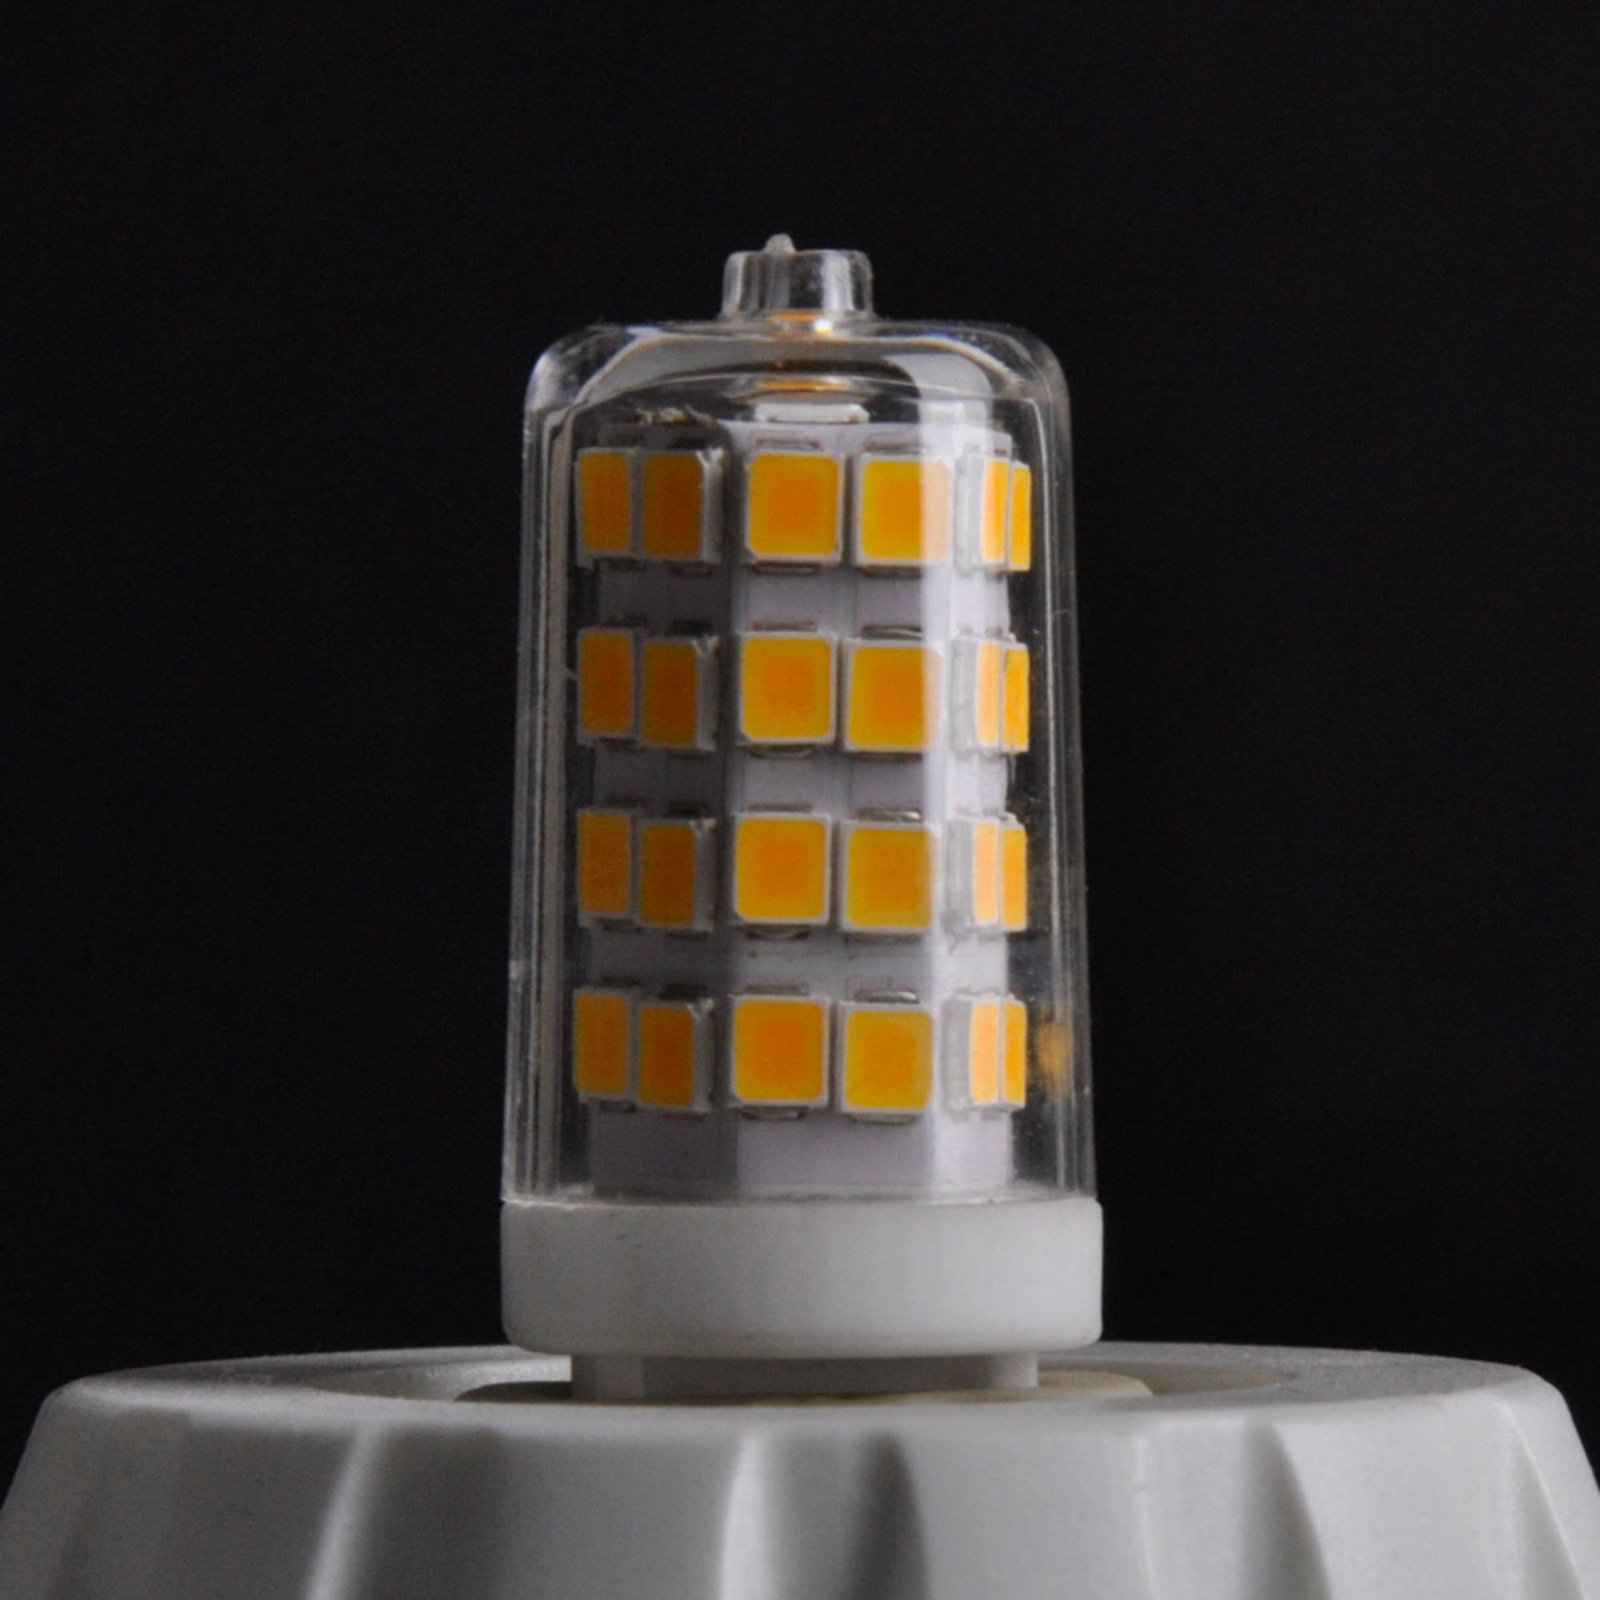 LED-Stiftlampe G9 3W, warmweiß, 330 Lumen 5er-Set